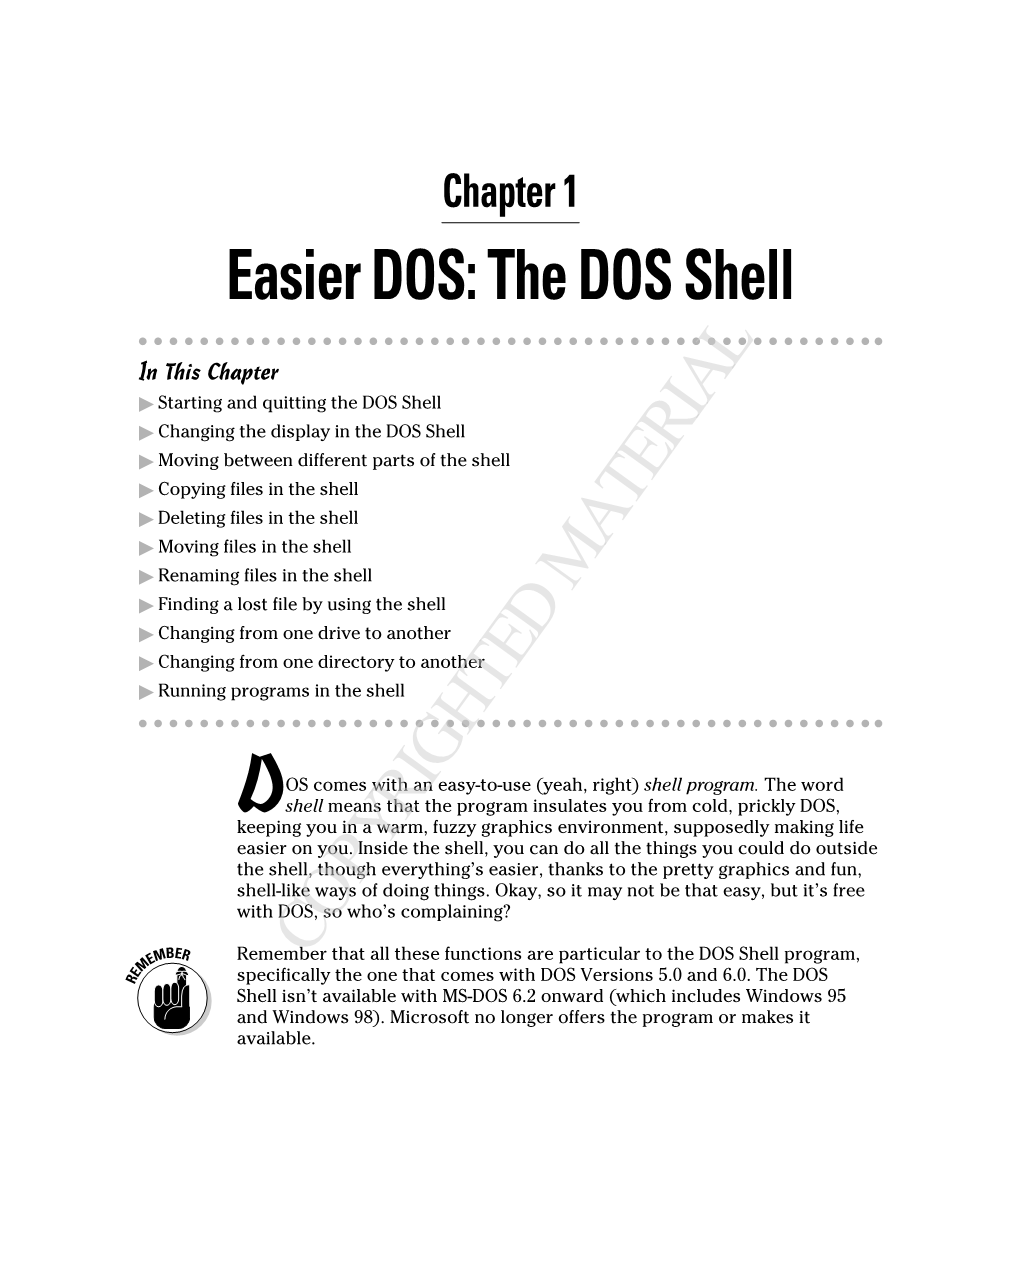 Easier DOS: the DOS Shell